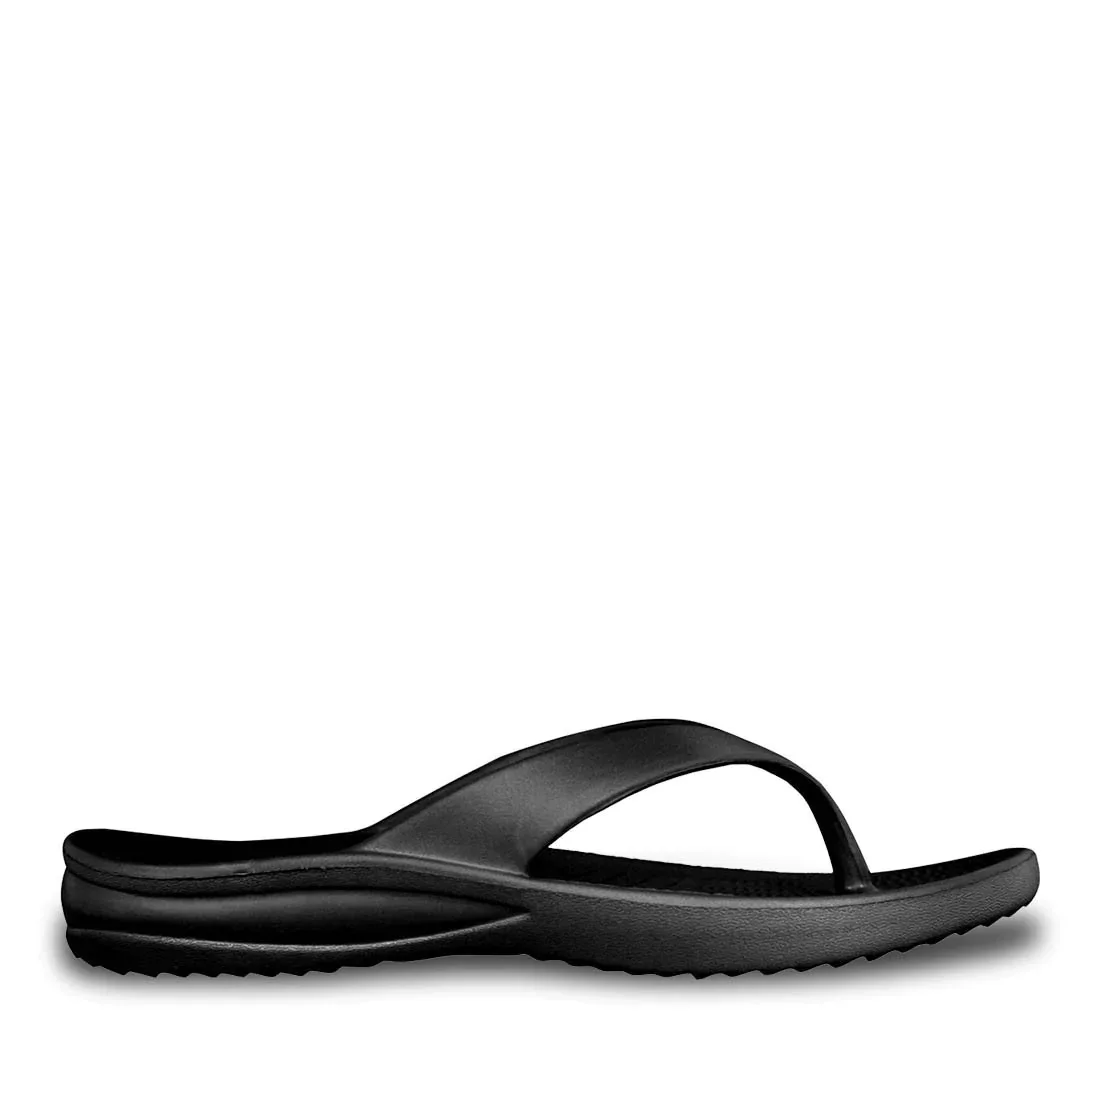 Image of Men's Flip Flops - Black